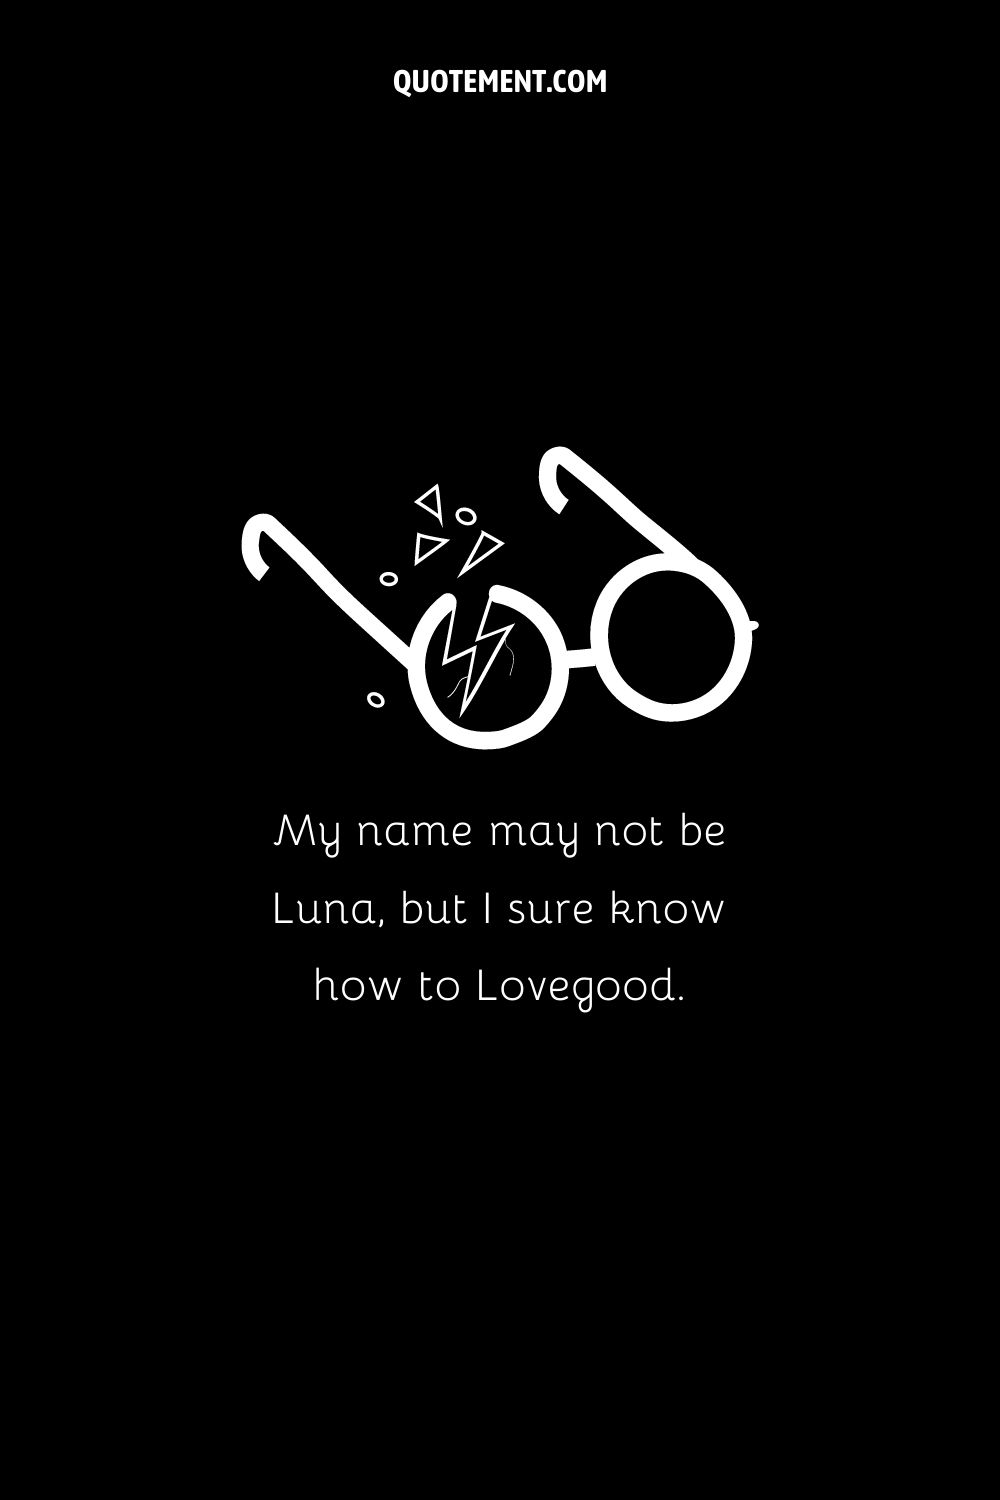 broken glasses illustration representing a savage pick up line inspired by Luna Lovegood
